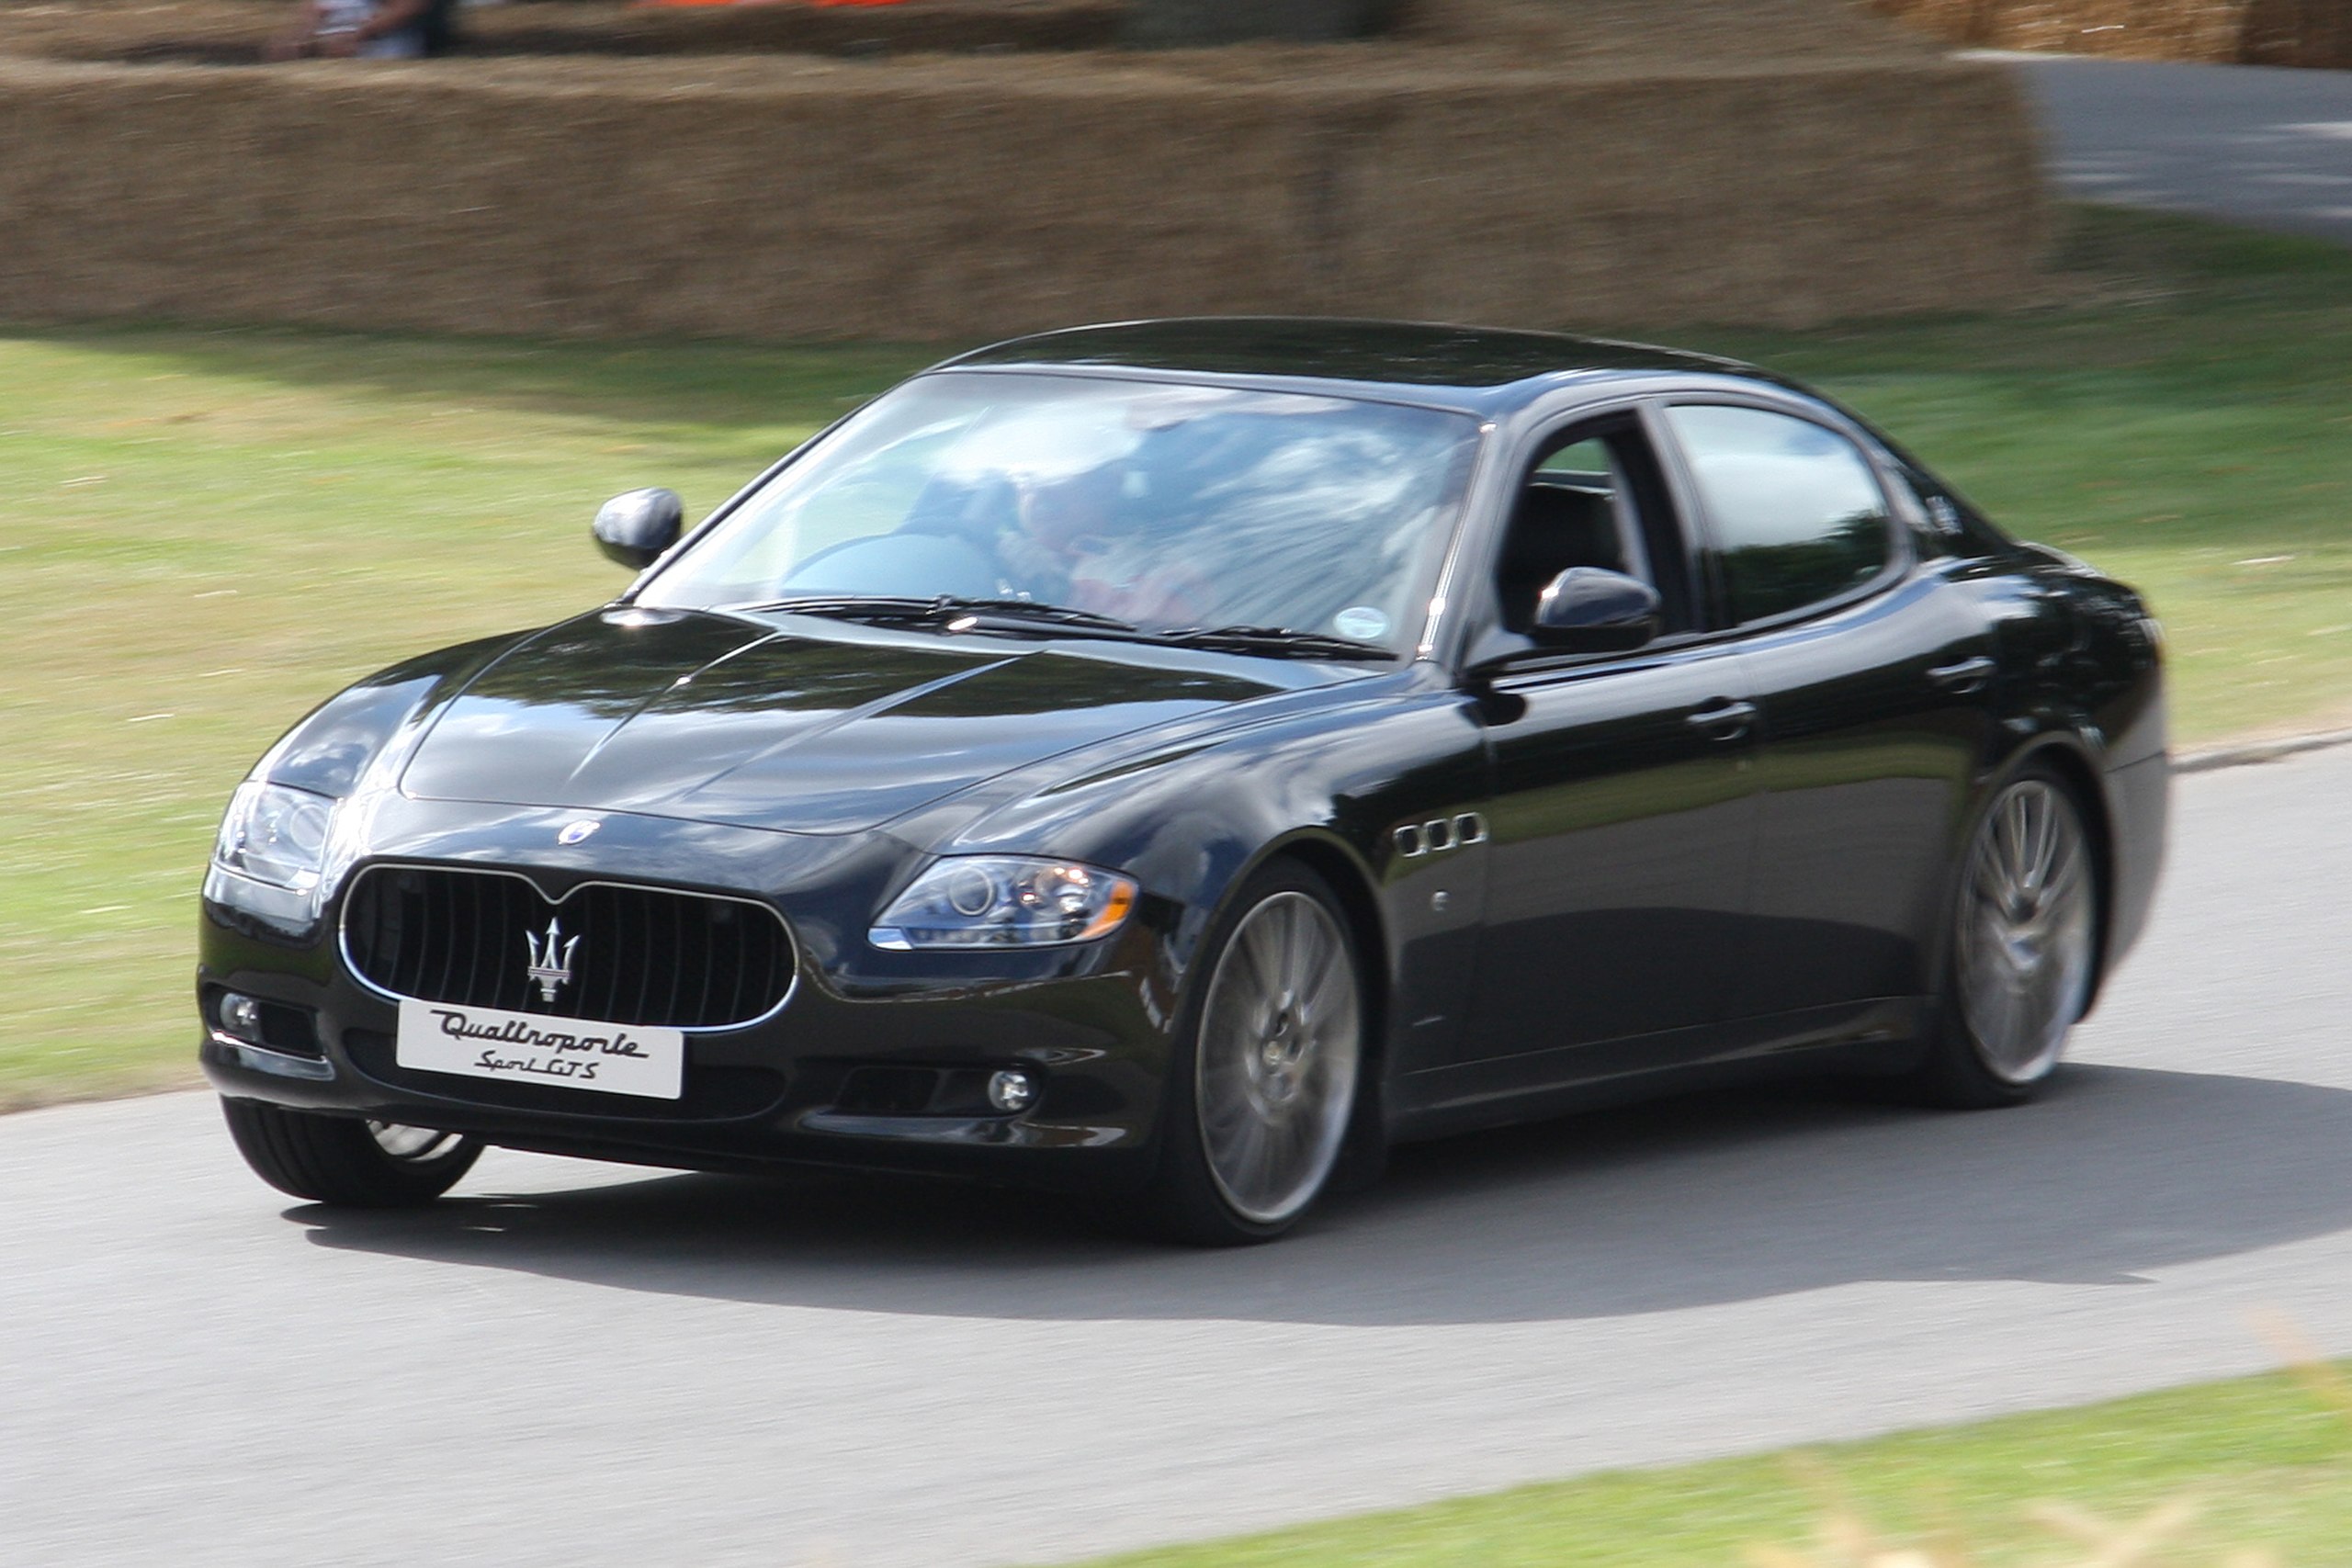 File:2009 Maserati Quattroporte Sport GT S - Flickr - exfordy.jpg -  Wikimedia Commons